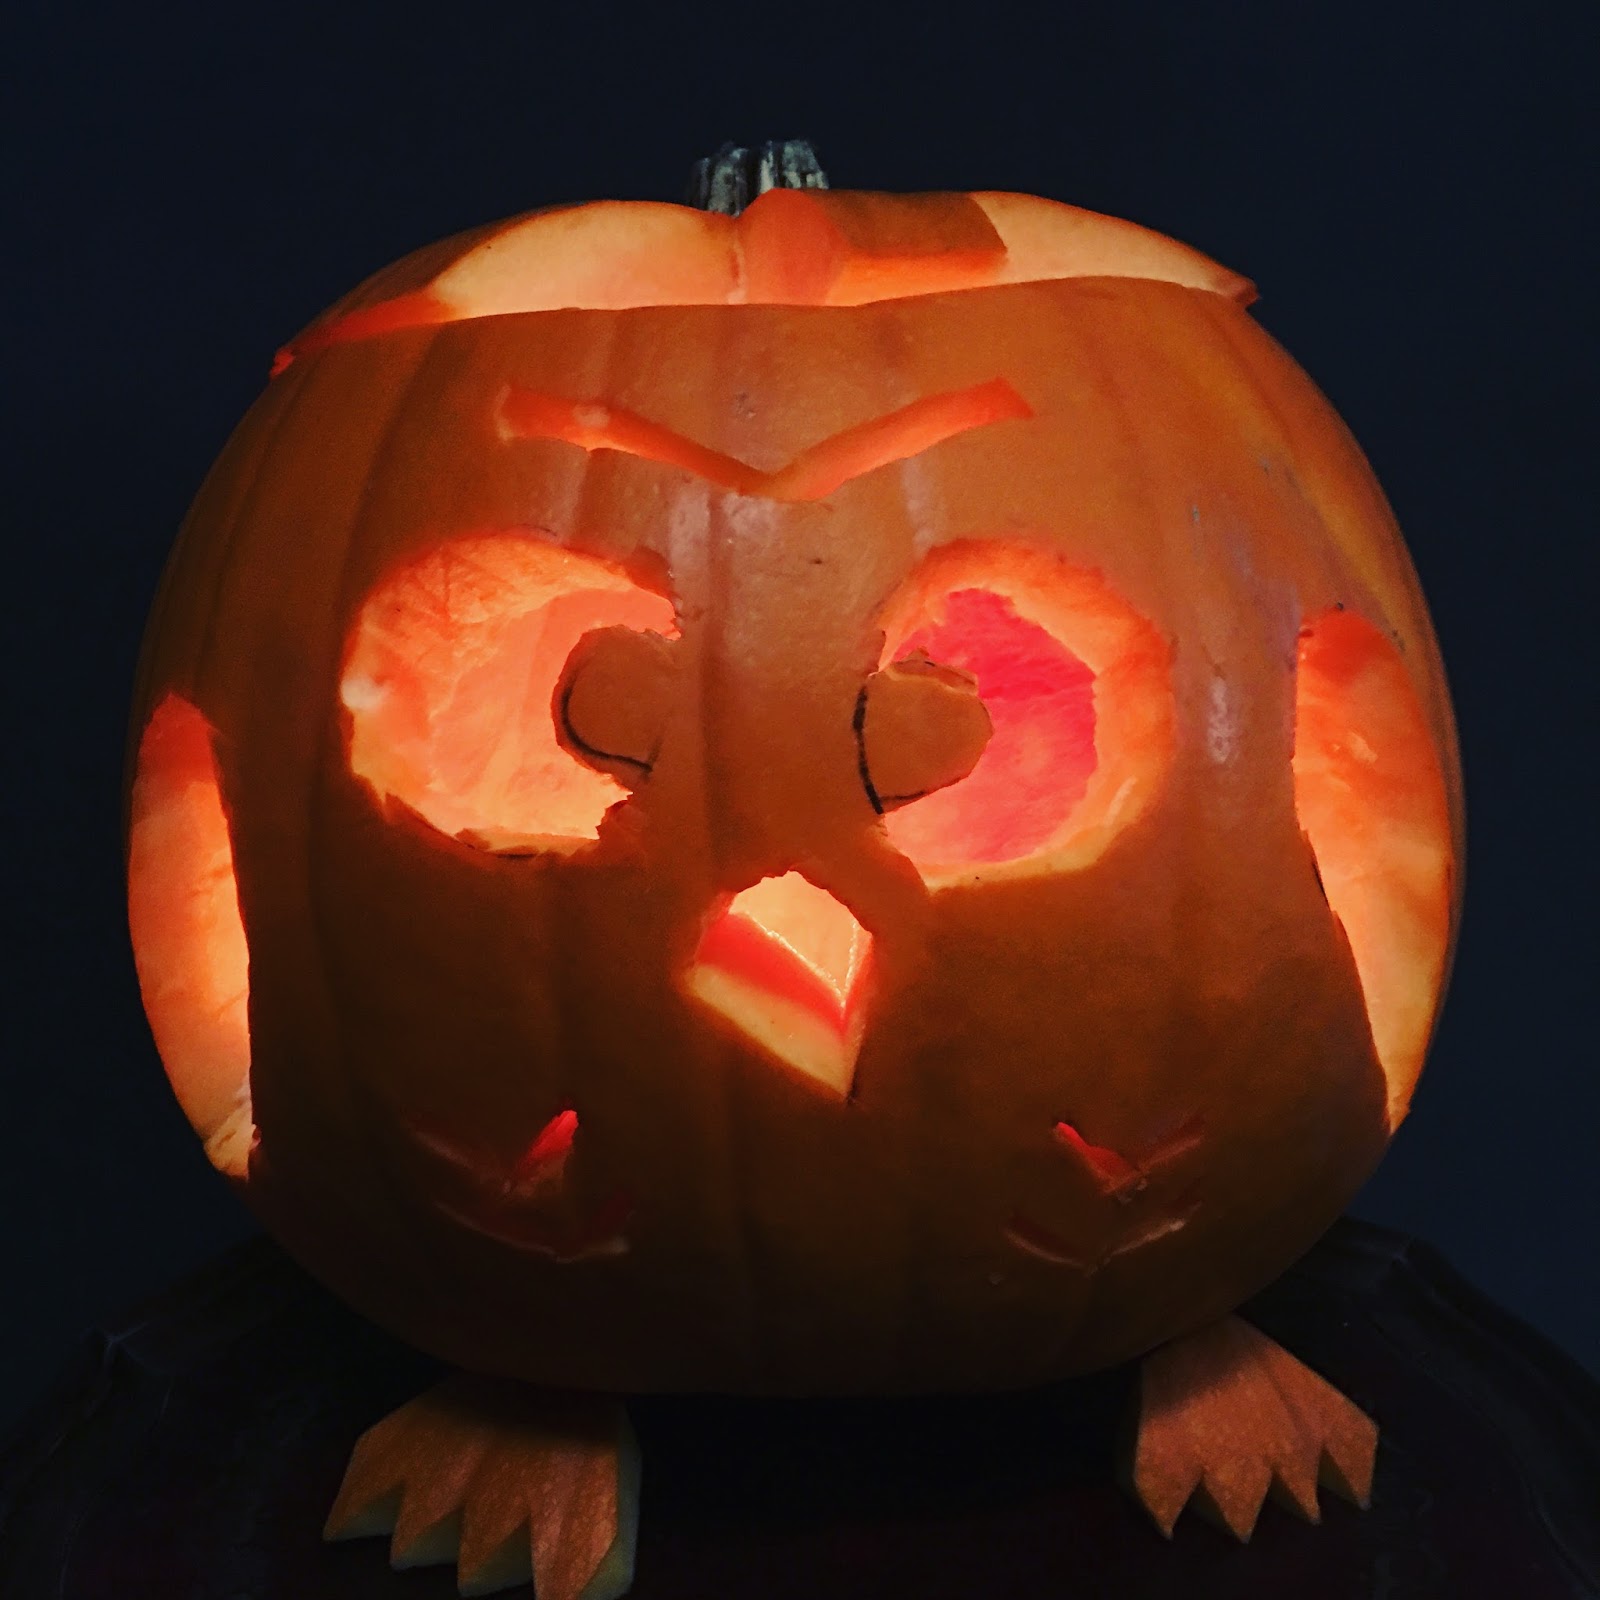 How to Carve a Simple Owl design in a Halloween Pumpkin #myfamiliespumpkin